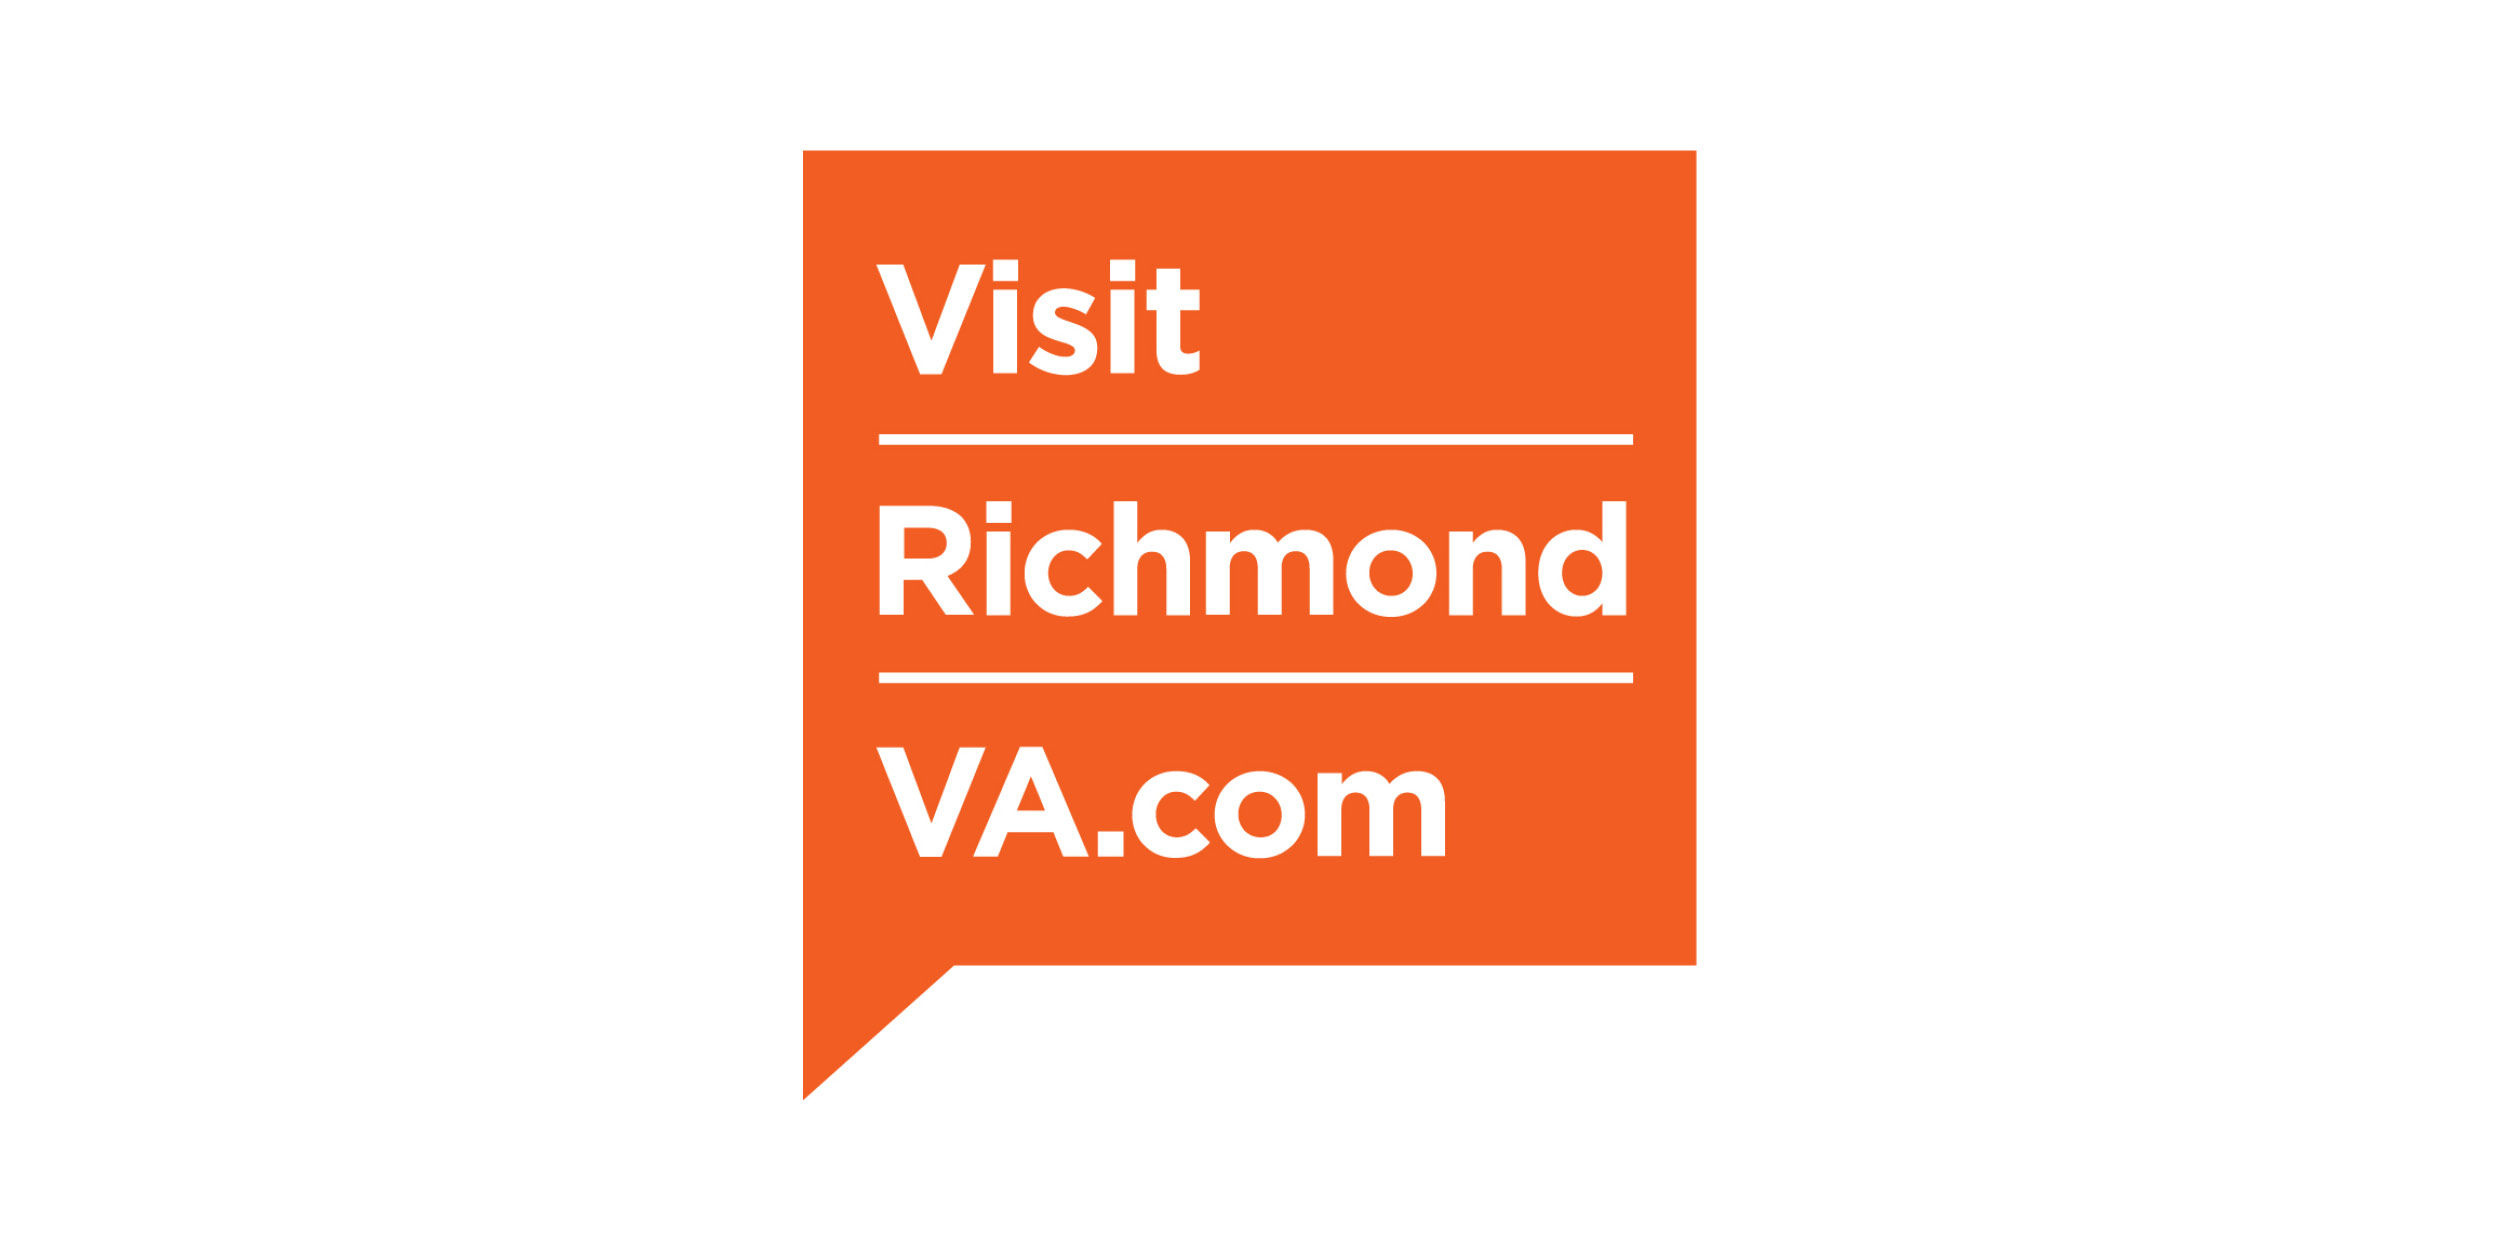 Visit Richmond.